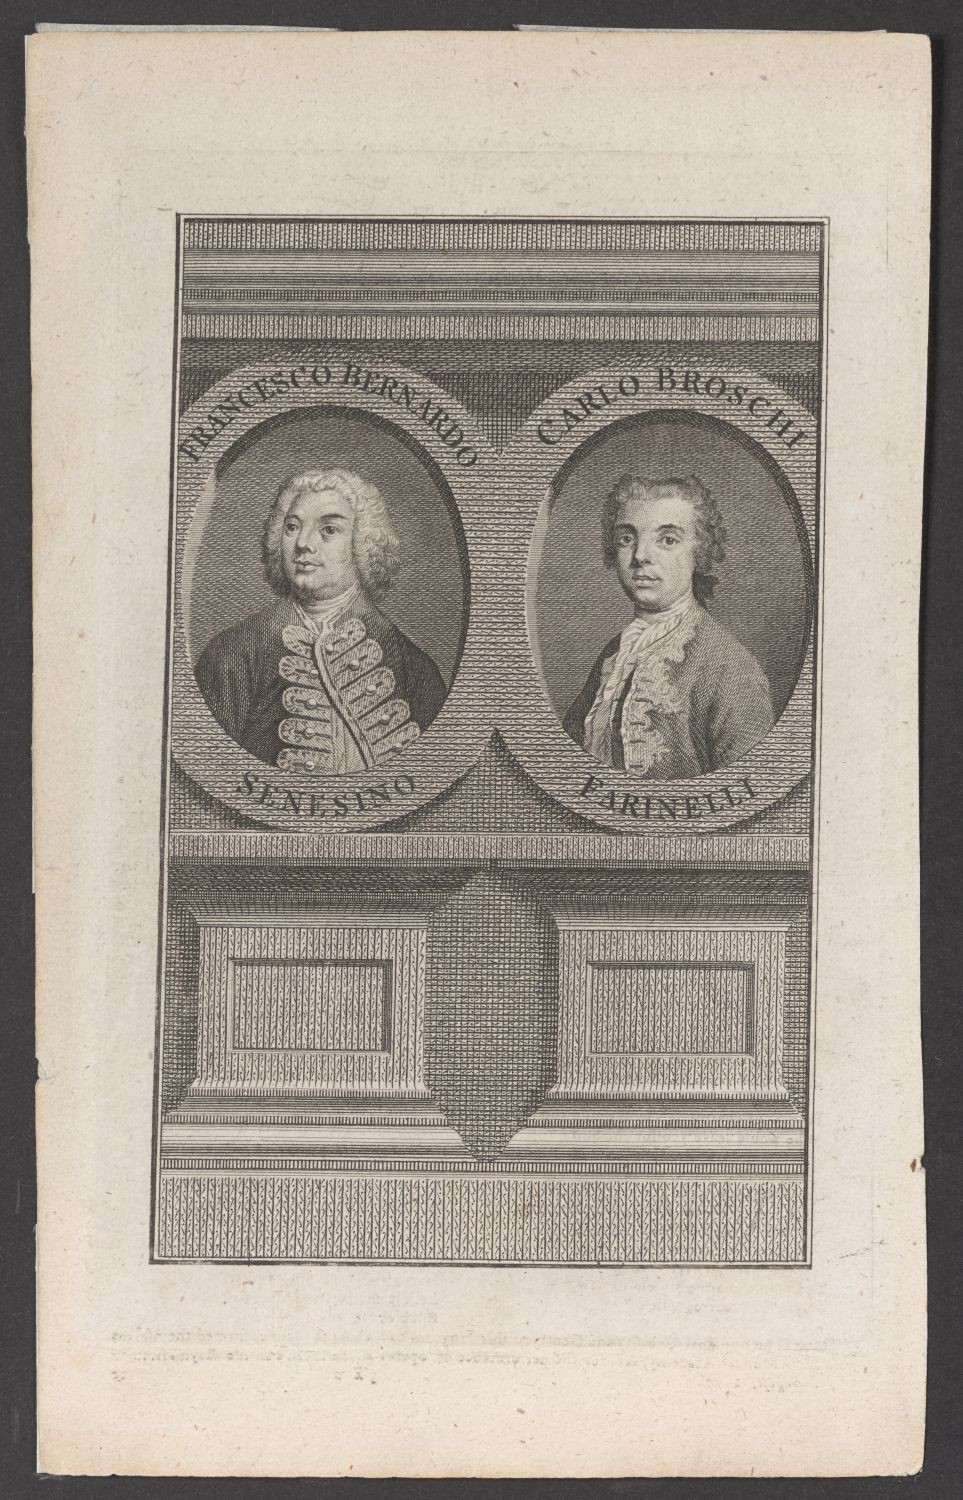 Doppelporträt Francesco Bernardi, genannt Senesino (1680-1750) und Carlo Broschi, genannt Farinelli (1705-1782) (Stiftung Händelhaus, Halle CC BY-NC-SA)